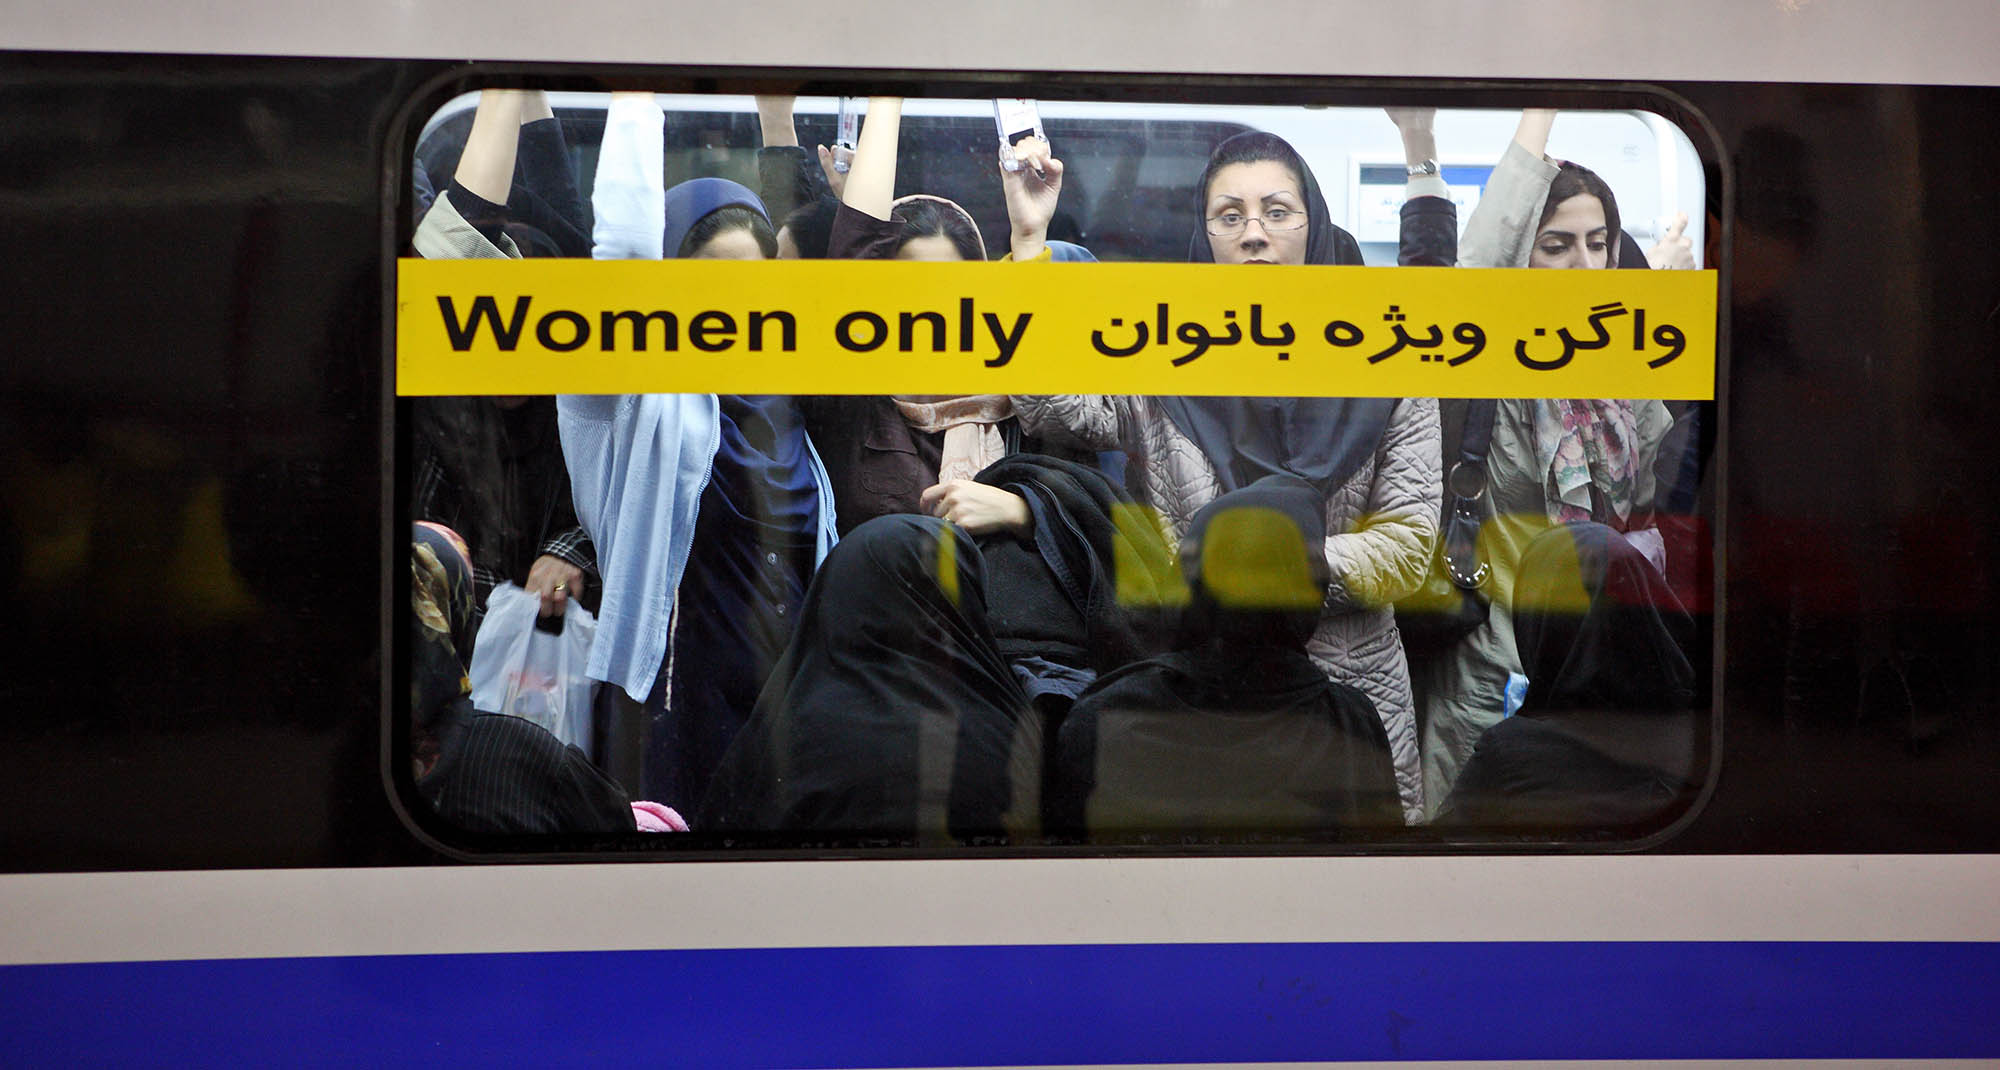 Underground station in Tehran Metro has separate compartments for women only (2007, Tehran, Iran). Editorial credit: Vladimir Melnik / Shutterstock.com